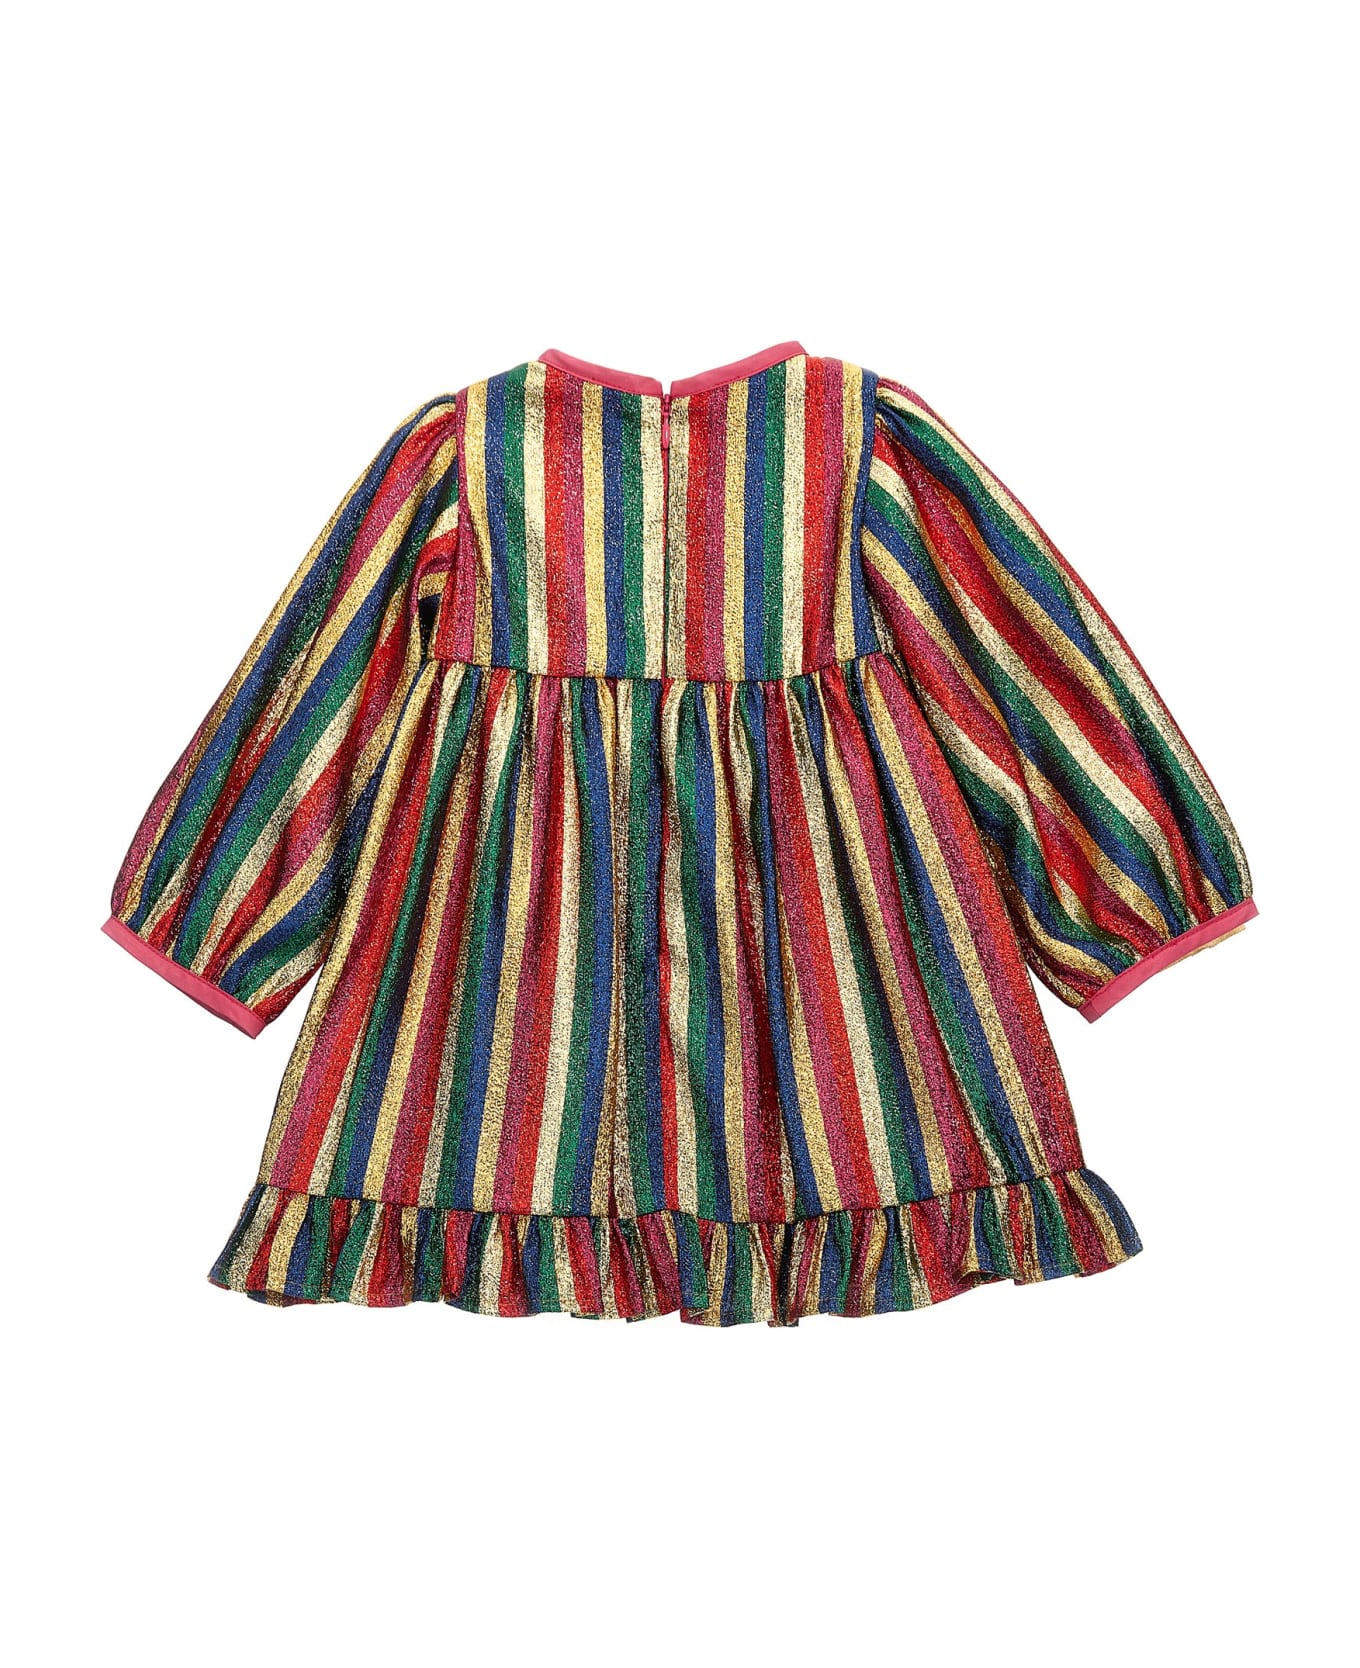 Stella McCartney Kids Lurex Striped Dress - Multicolor/multicolo